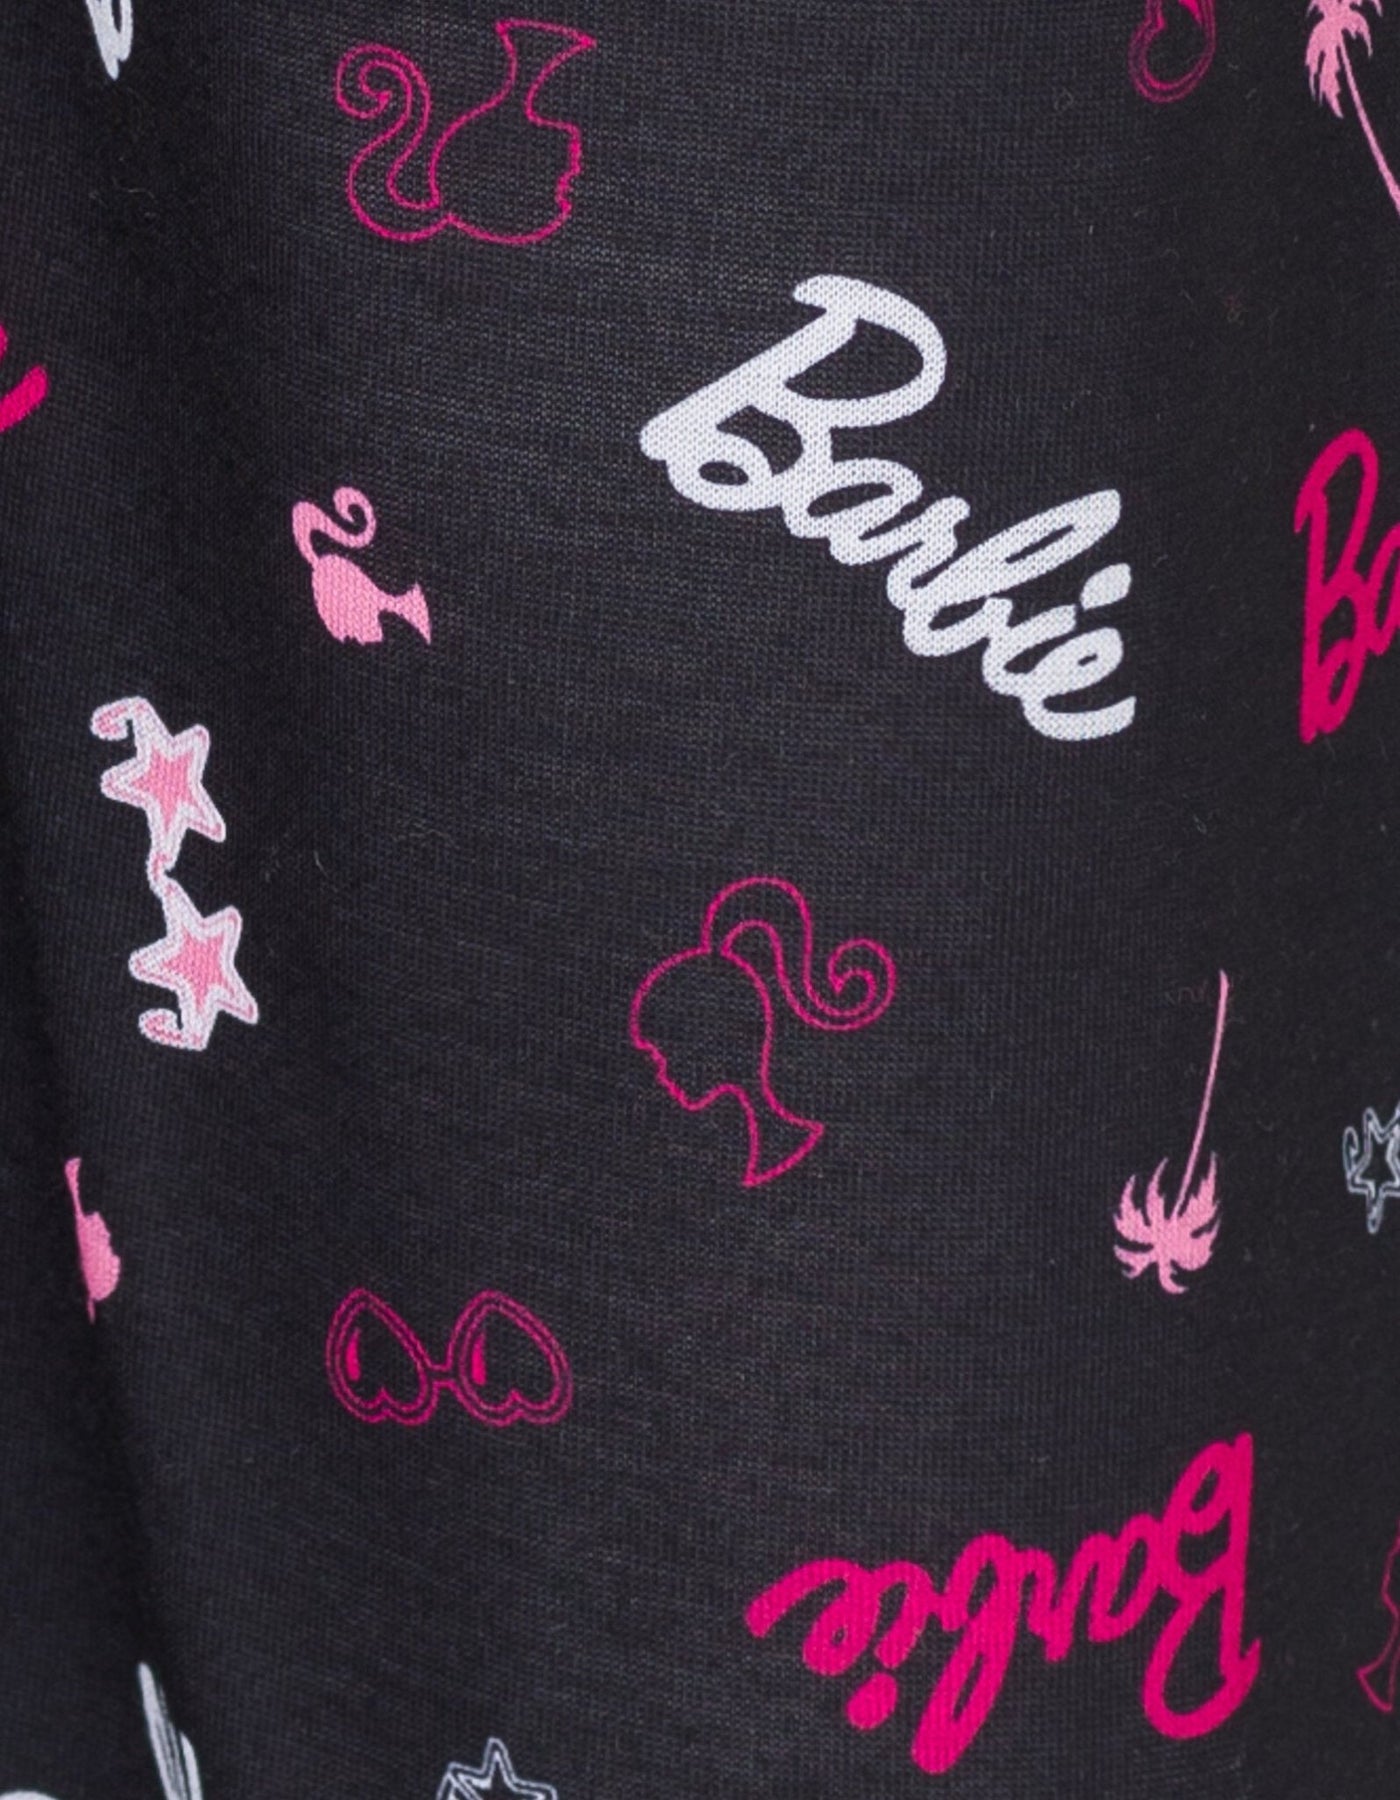 Barbie Pullover Pajama Shirt and Pants Sleep Set - imagikids